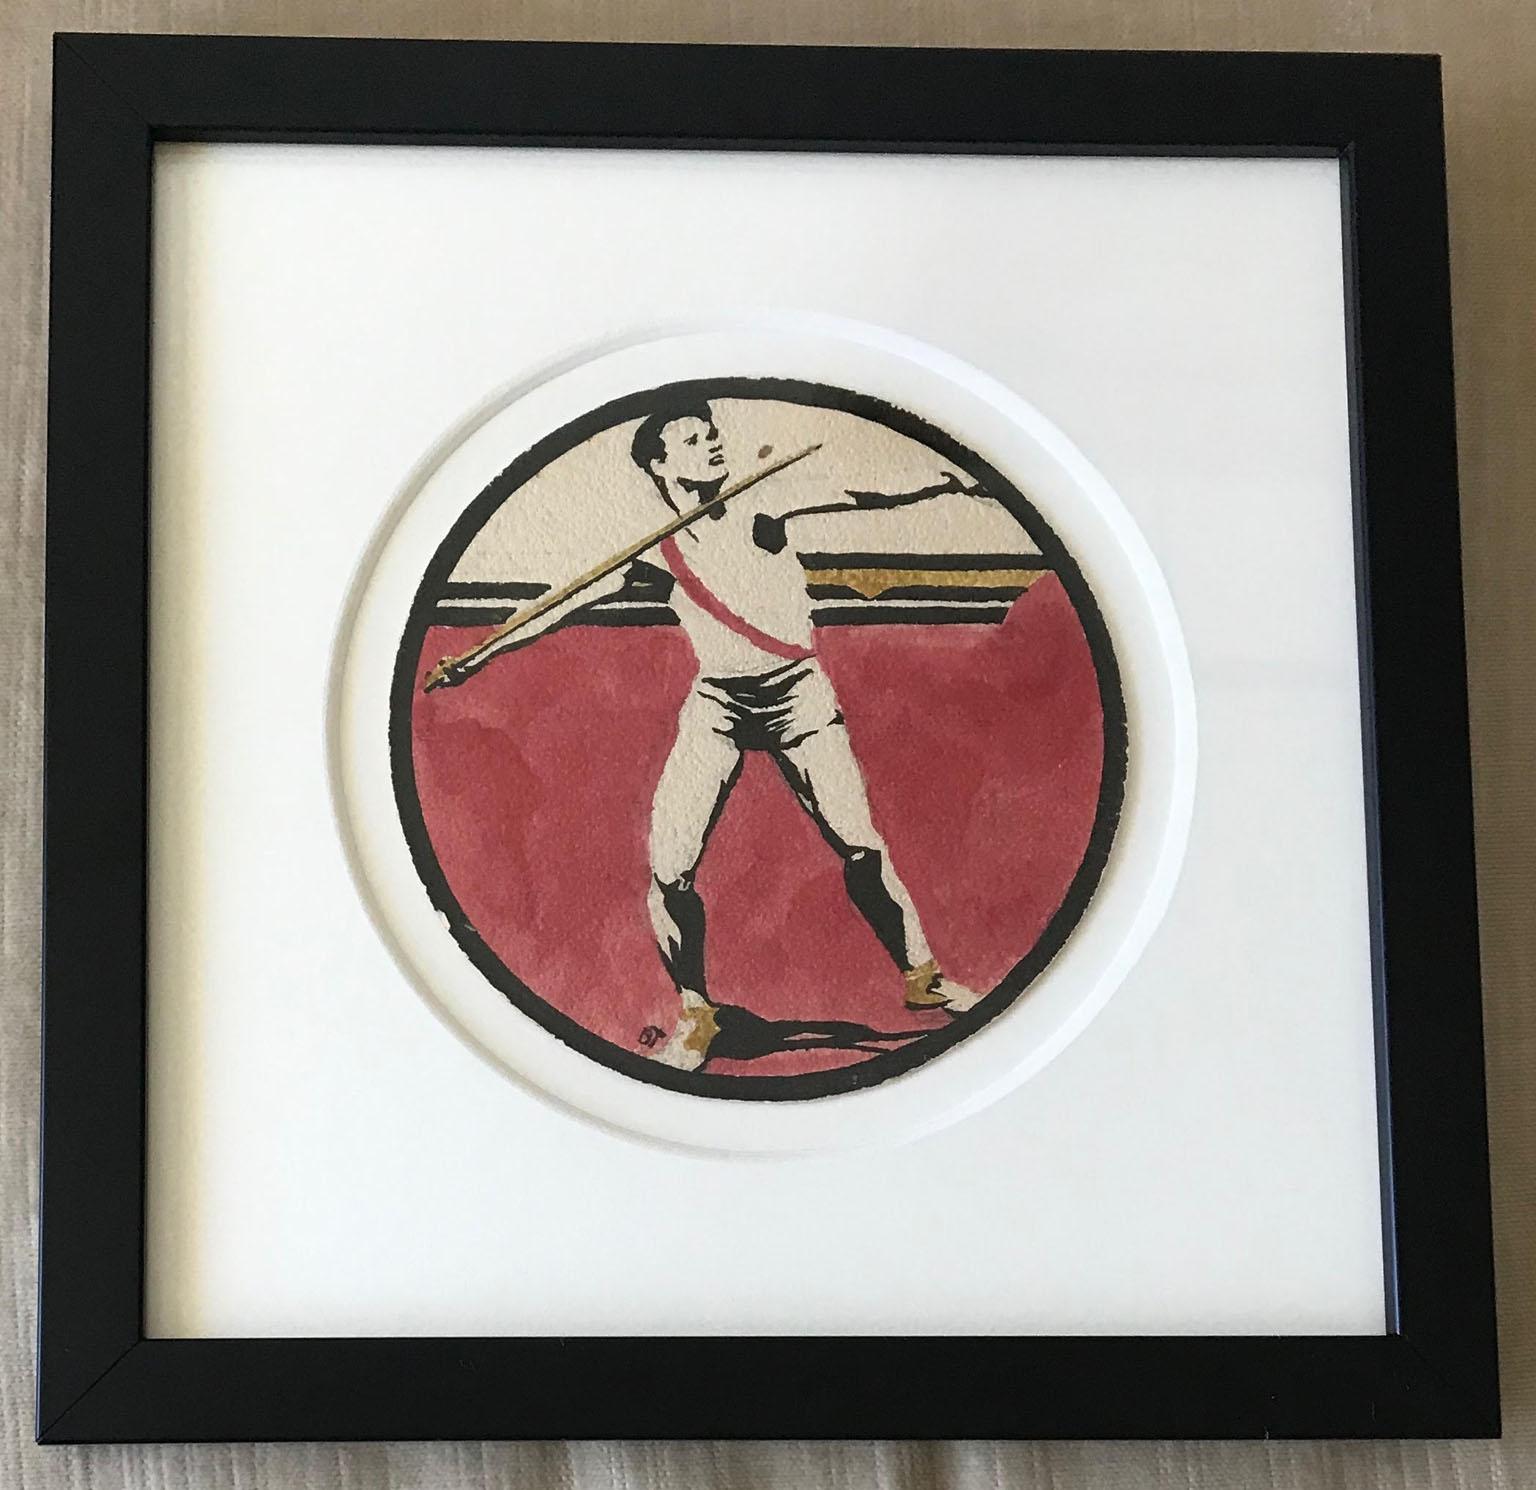 1932 olympics javelin throw